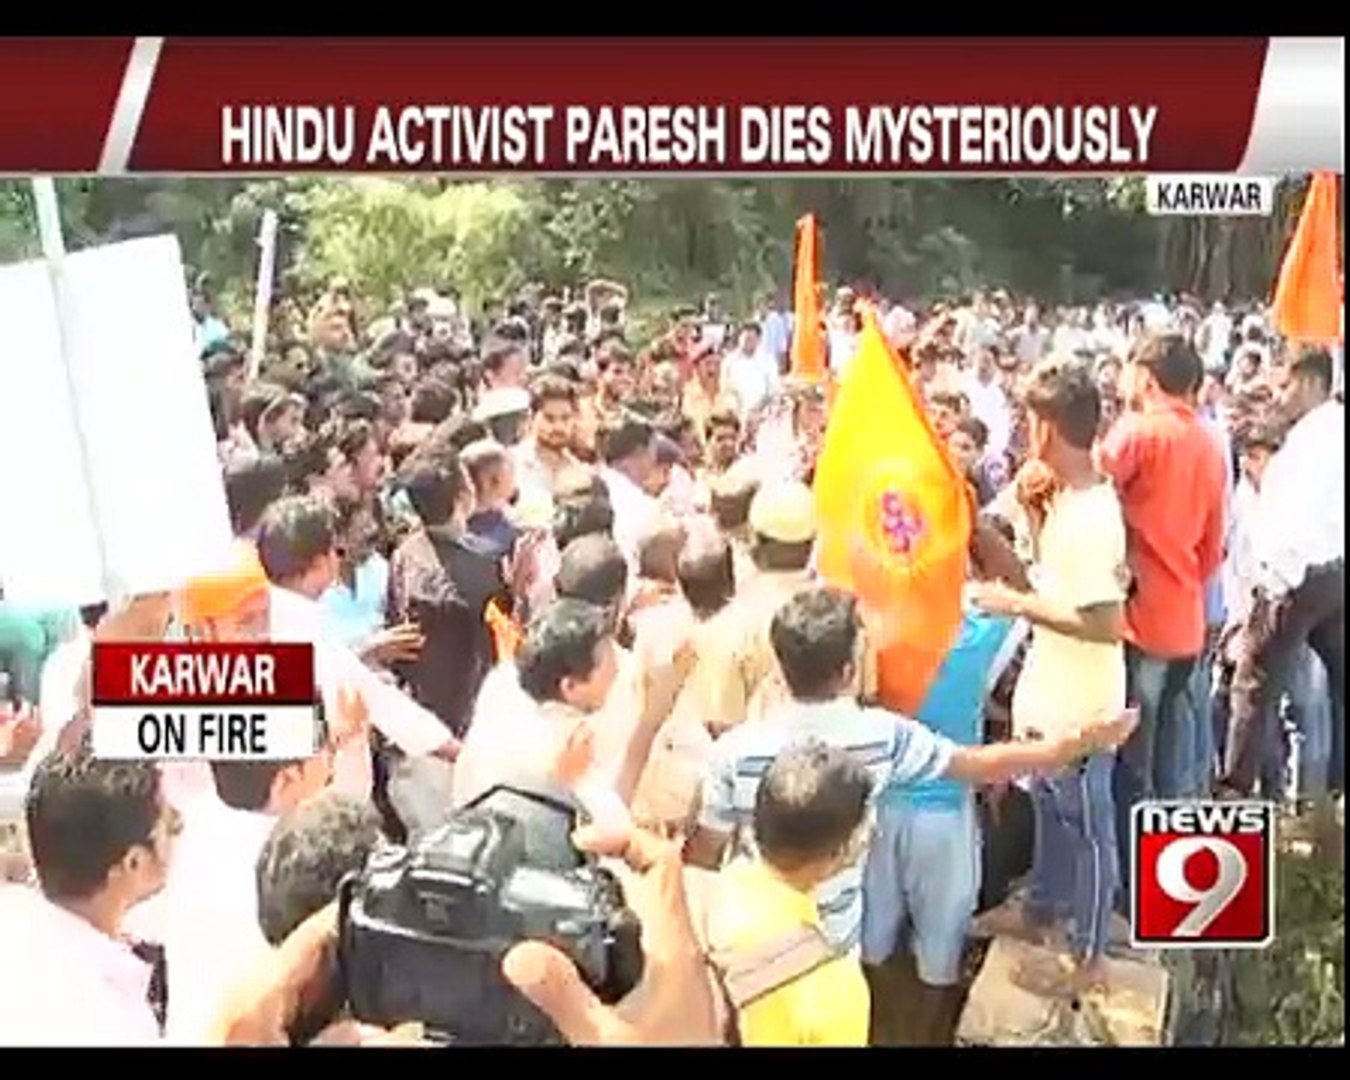 Hindu activist Paresh dies mysteriously - NEWS9